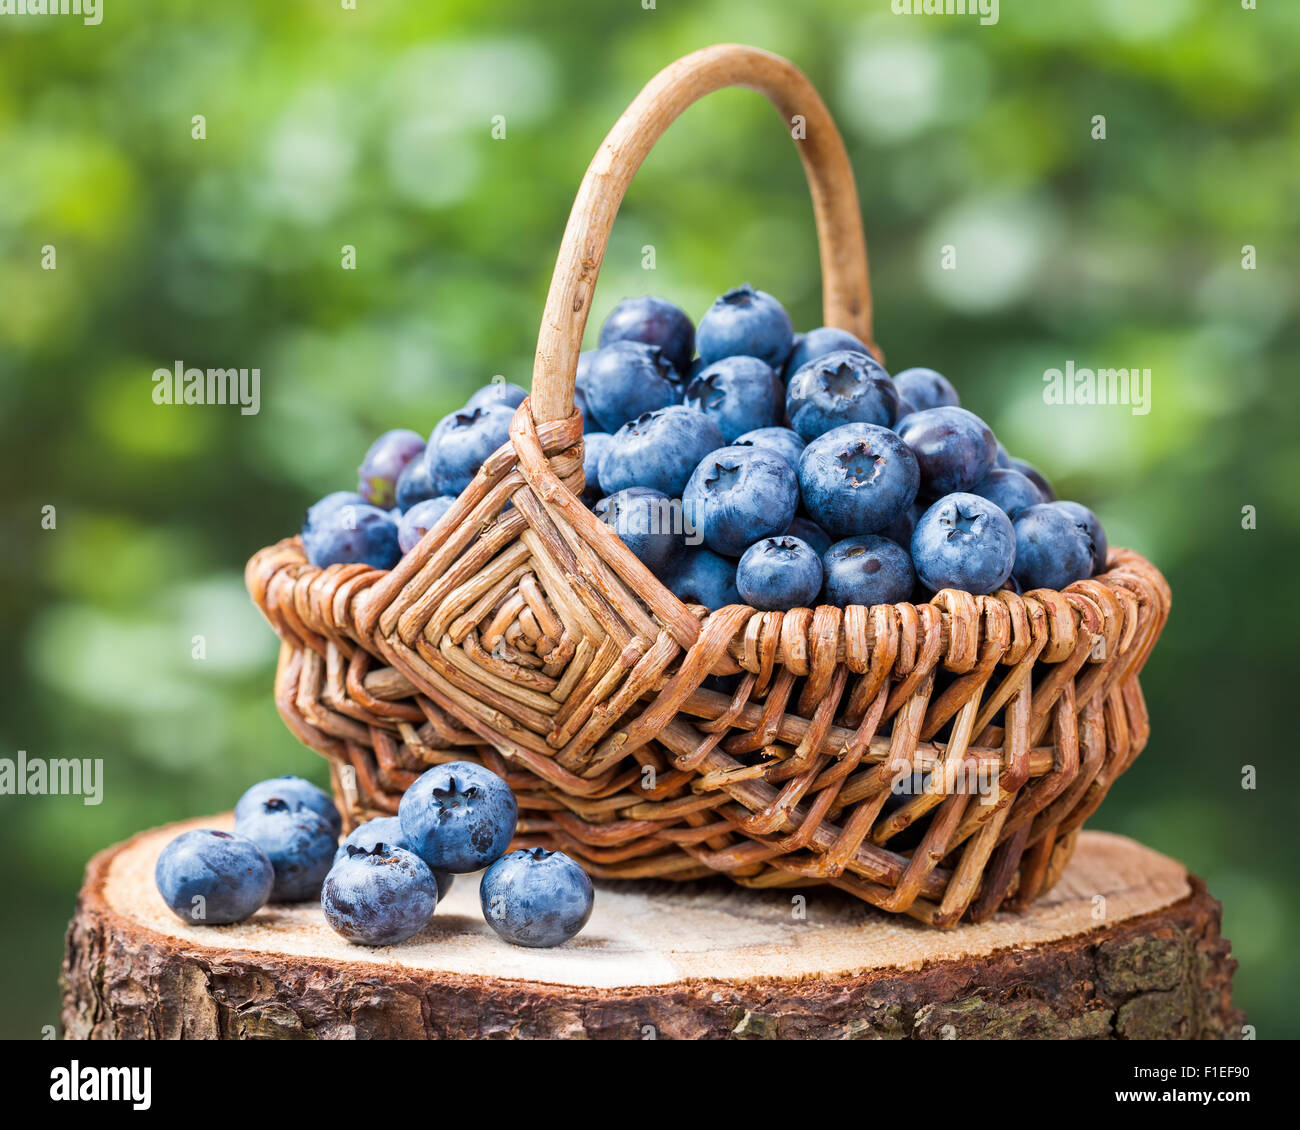 Basket with ripe blueberries on stump Stock Photo